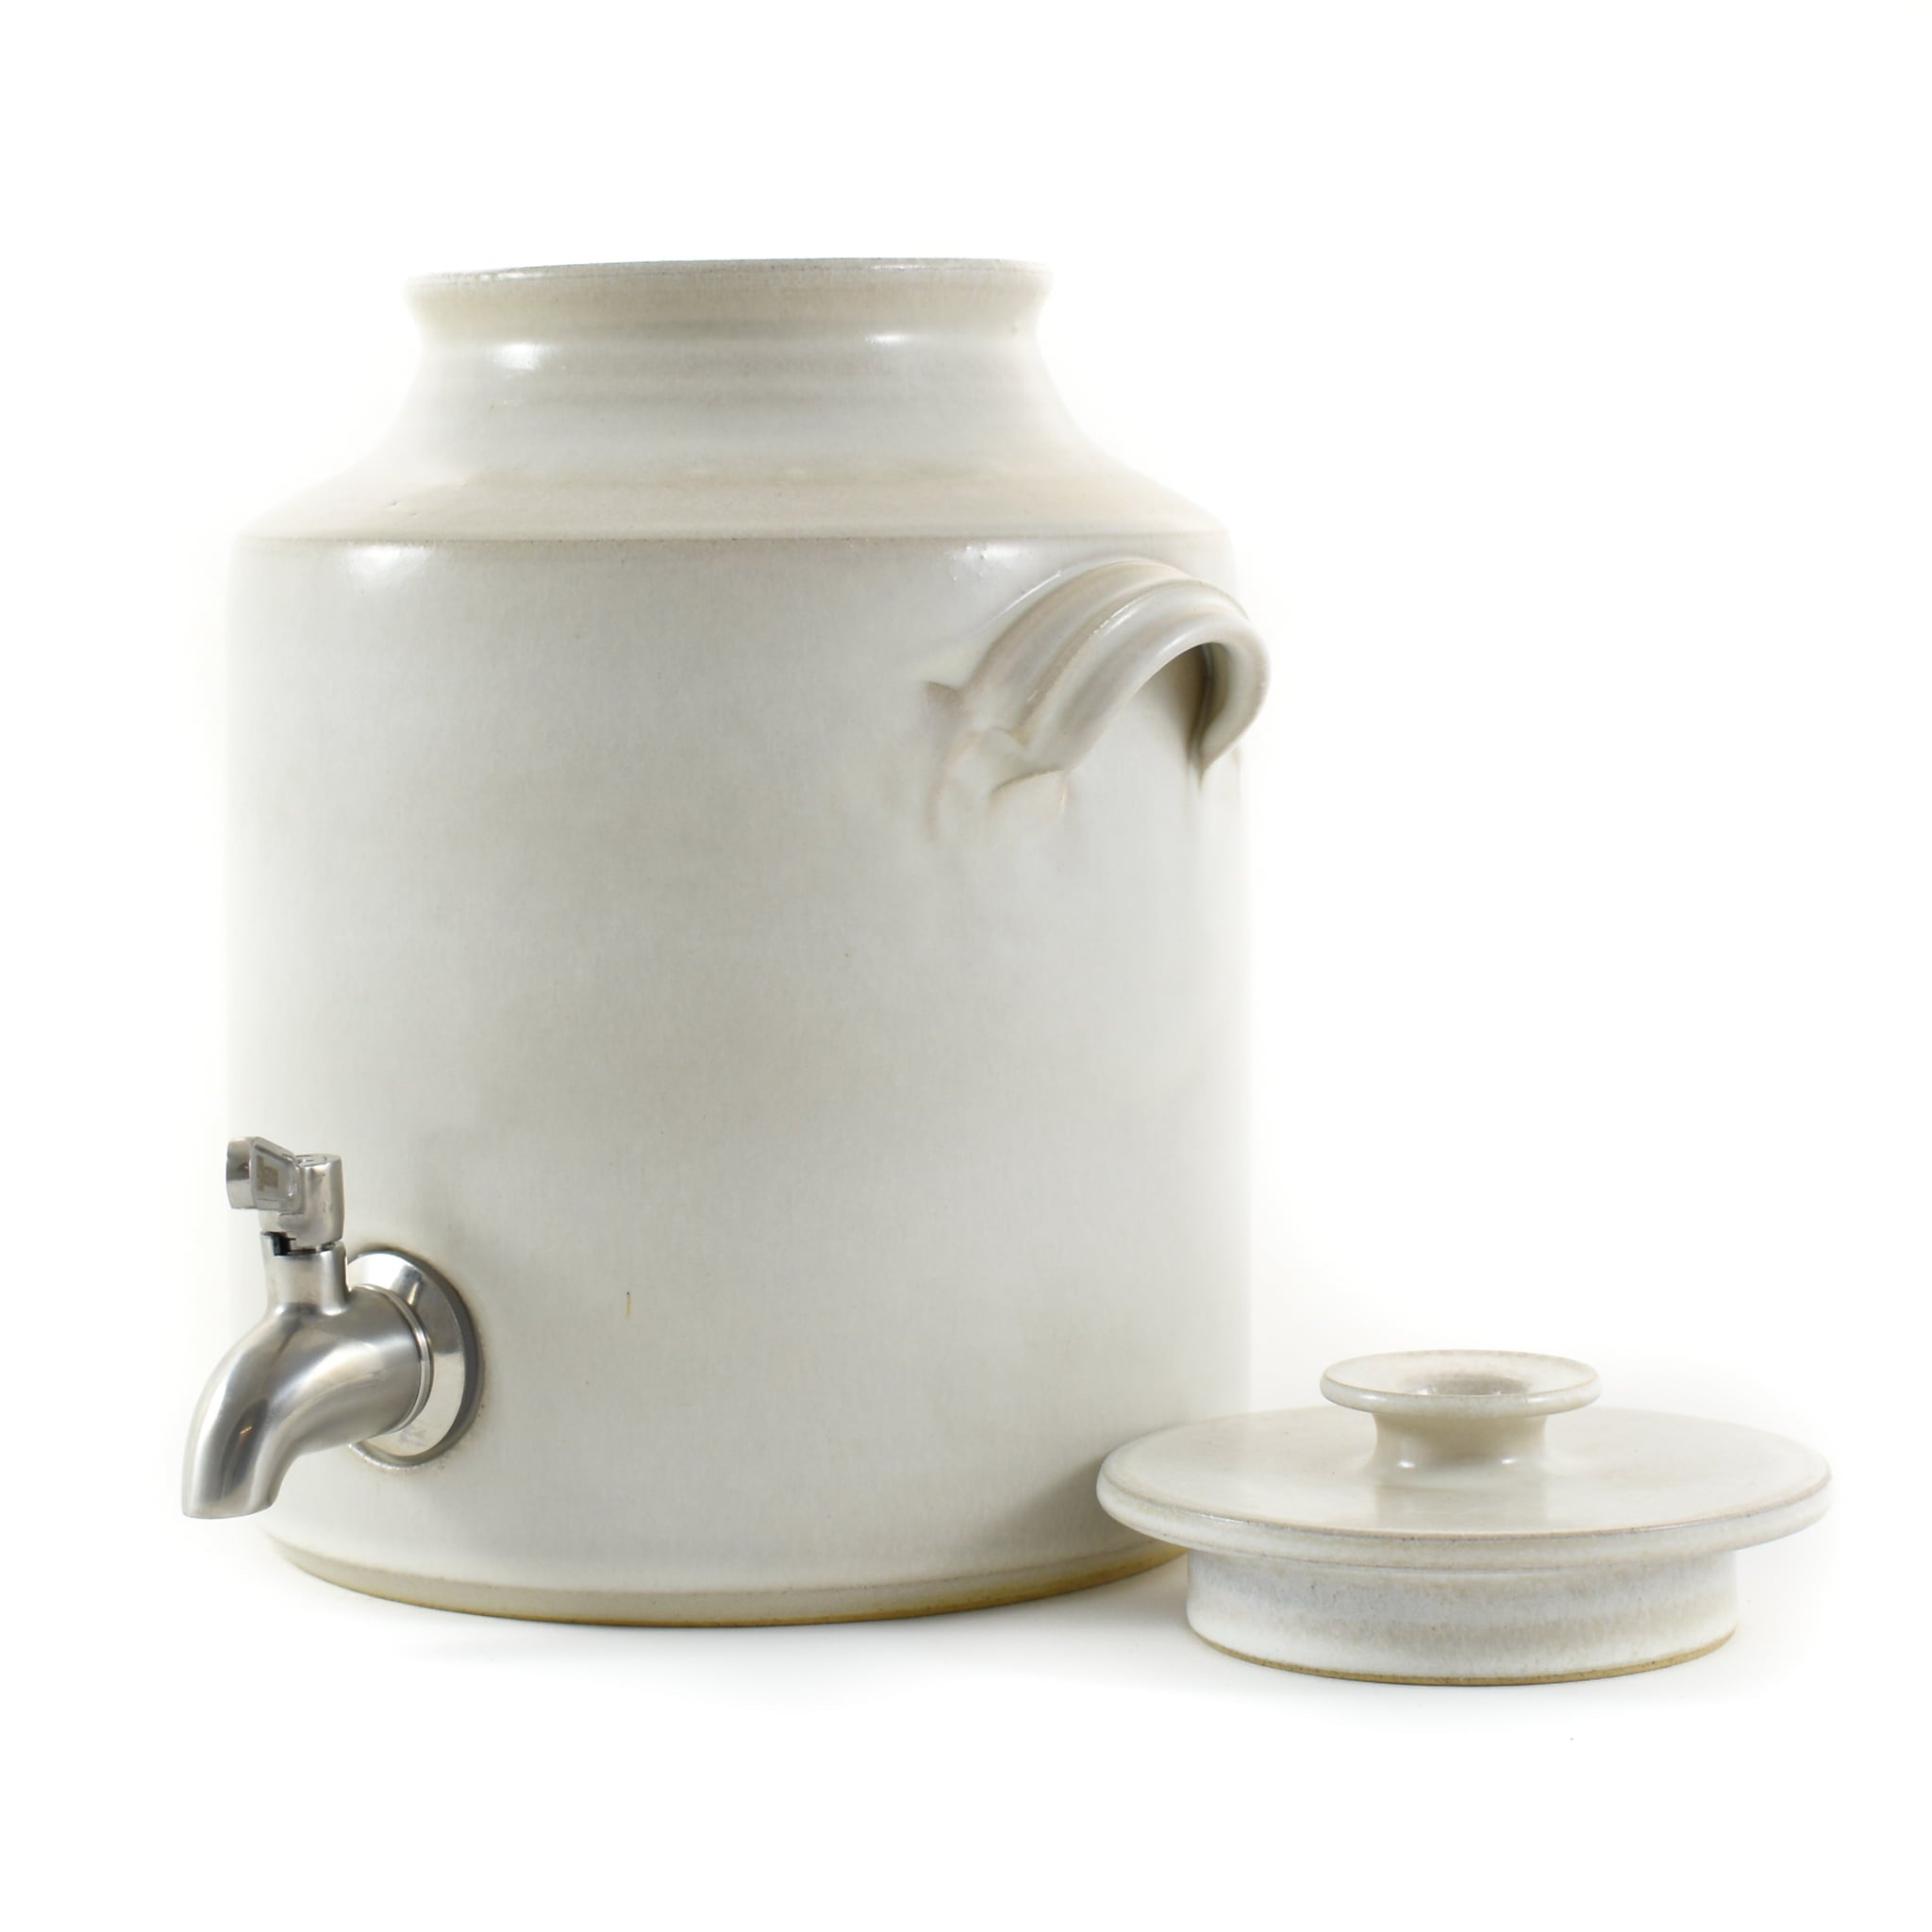 Handmade Stoneware Vinaigrier / Kombucha Jar 2.5 litre